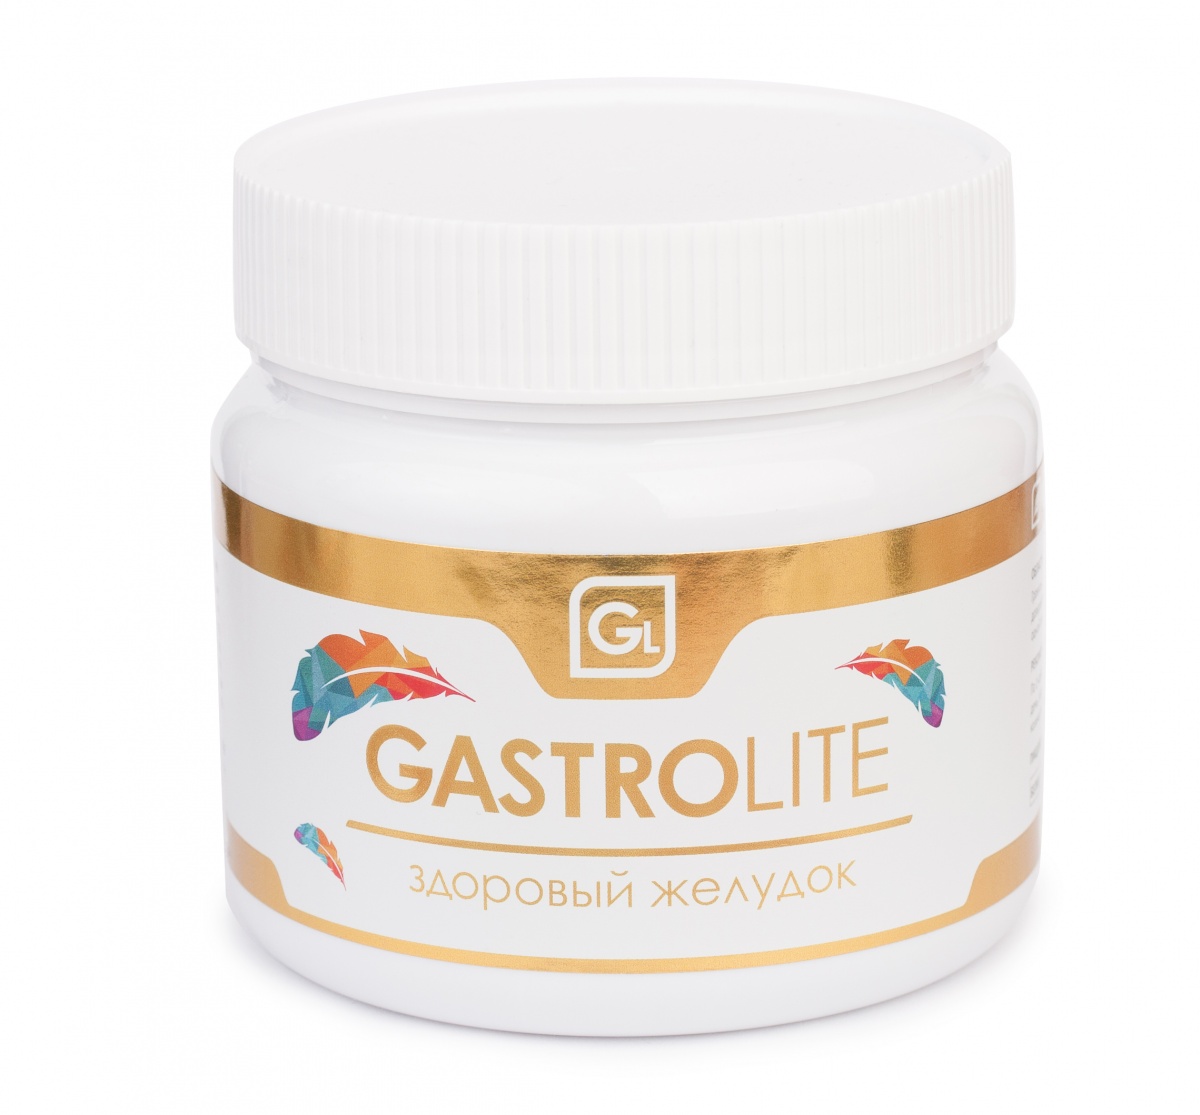 Gastrolite